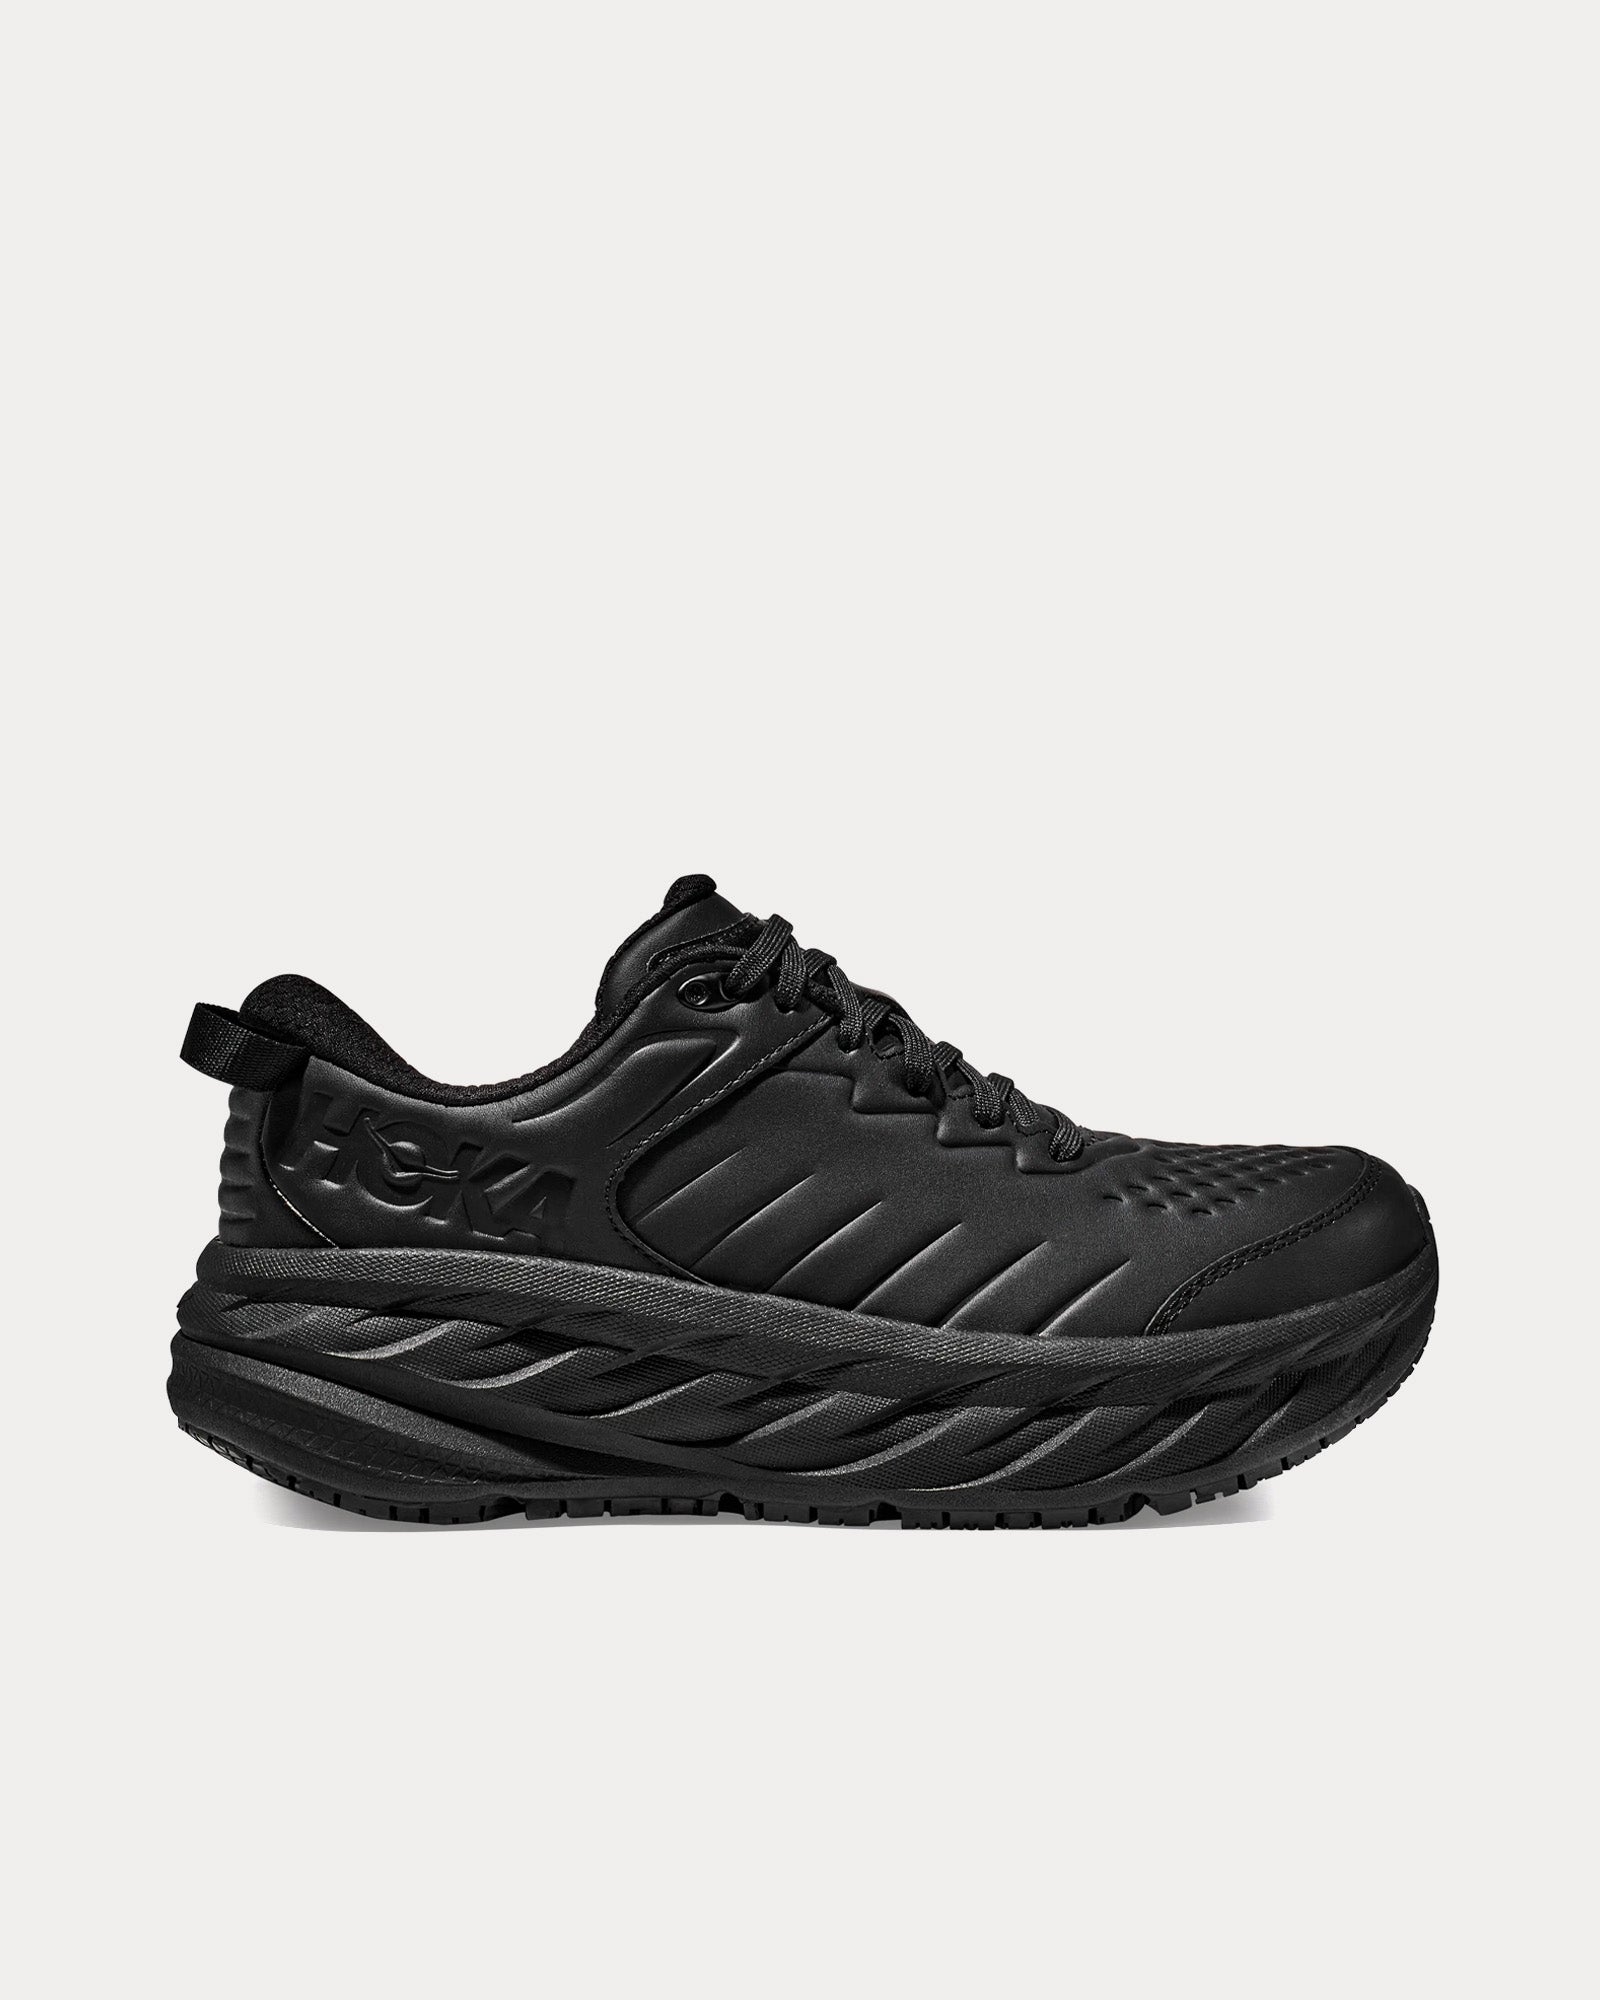 Hoka - Bondi SR Black / Black Running Shoes